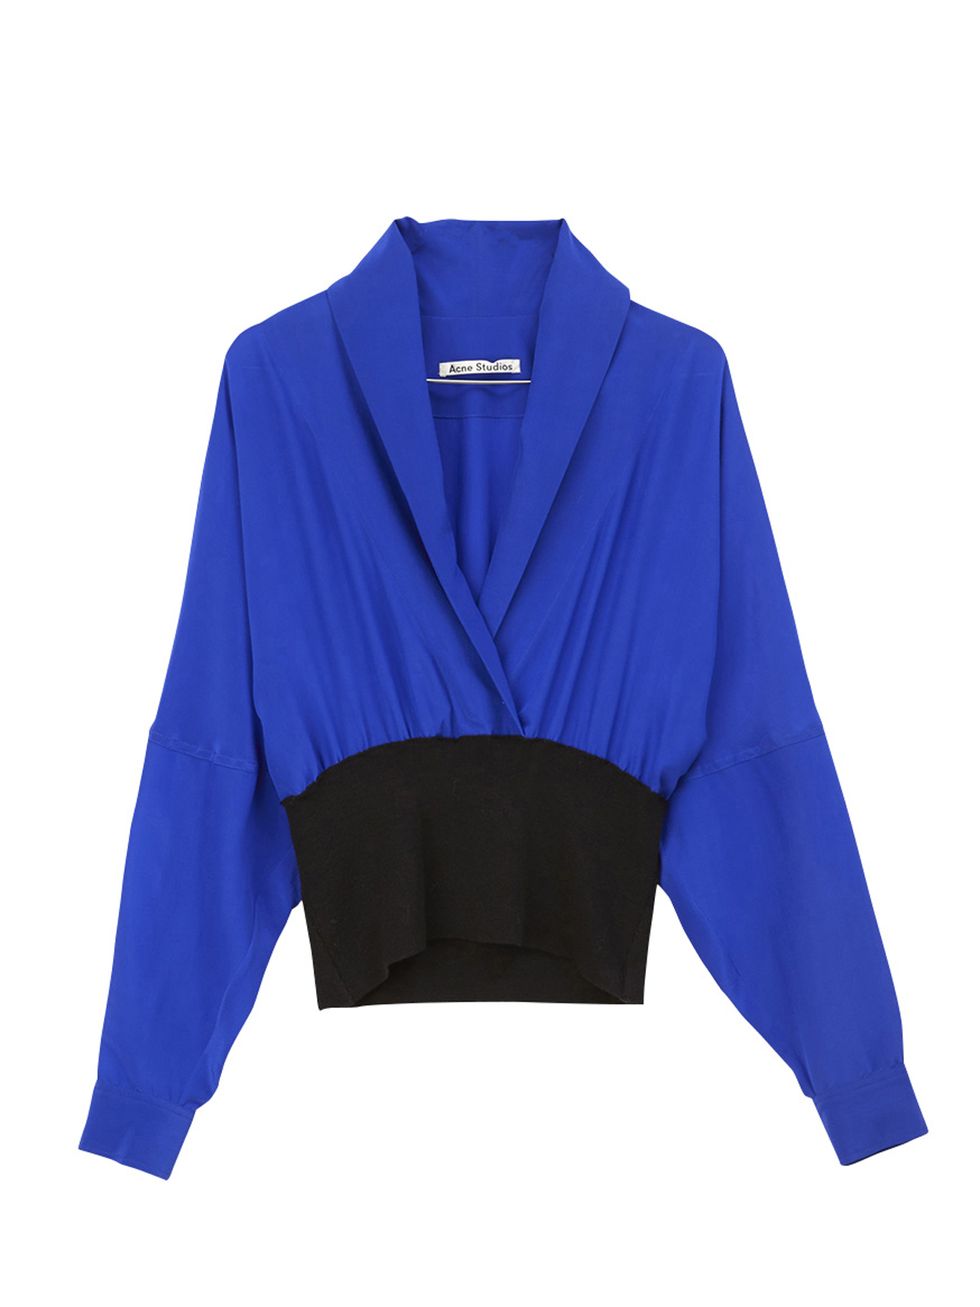 Blue, Collar, Sleeve, Electric blue, Uniform, Cobalt blue, Azure, Blazer, Costume, Active shirt, 